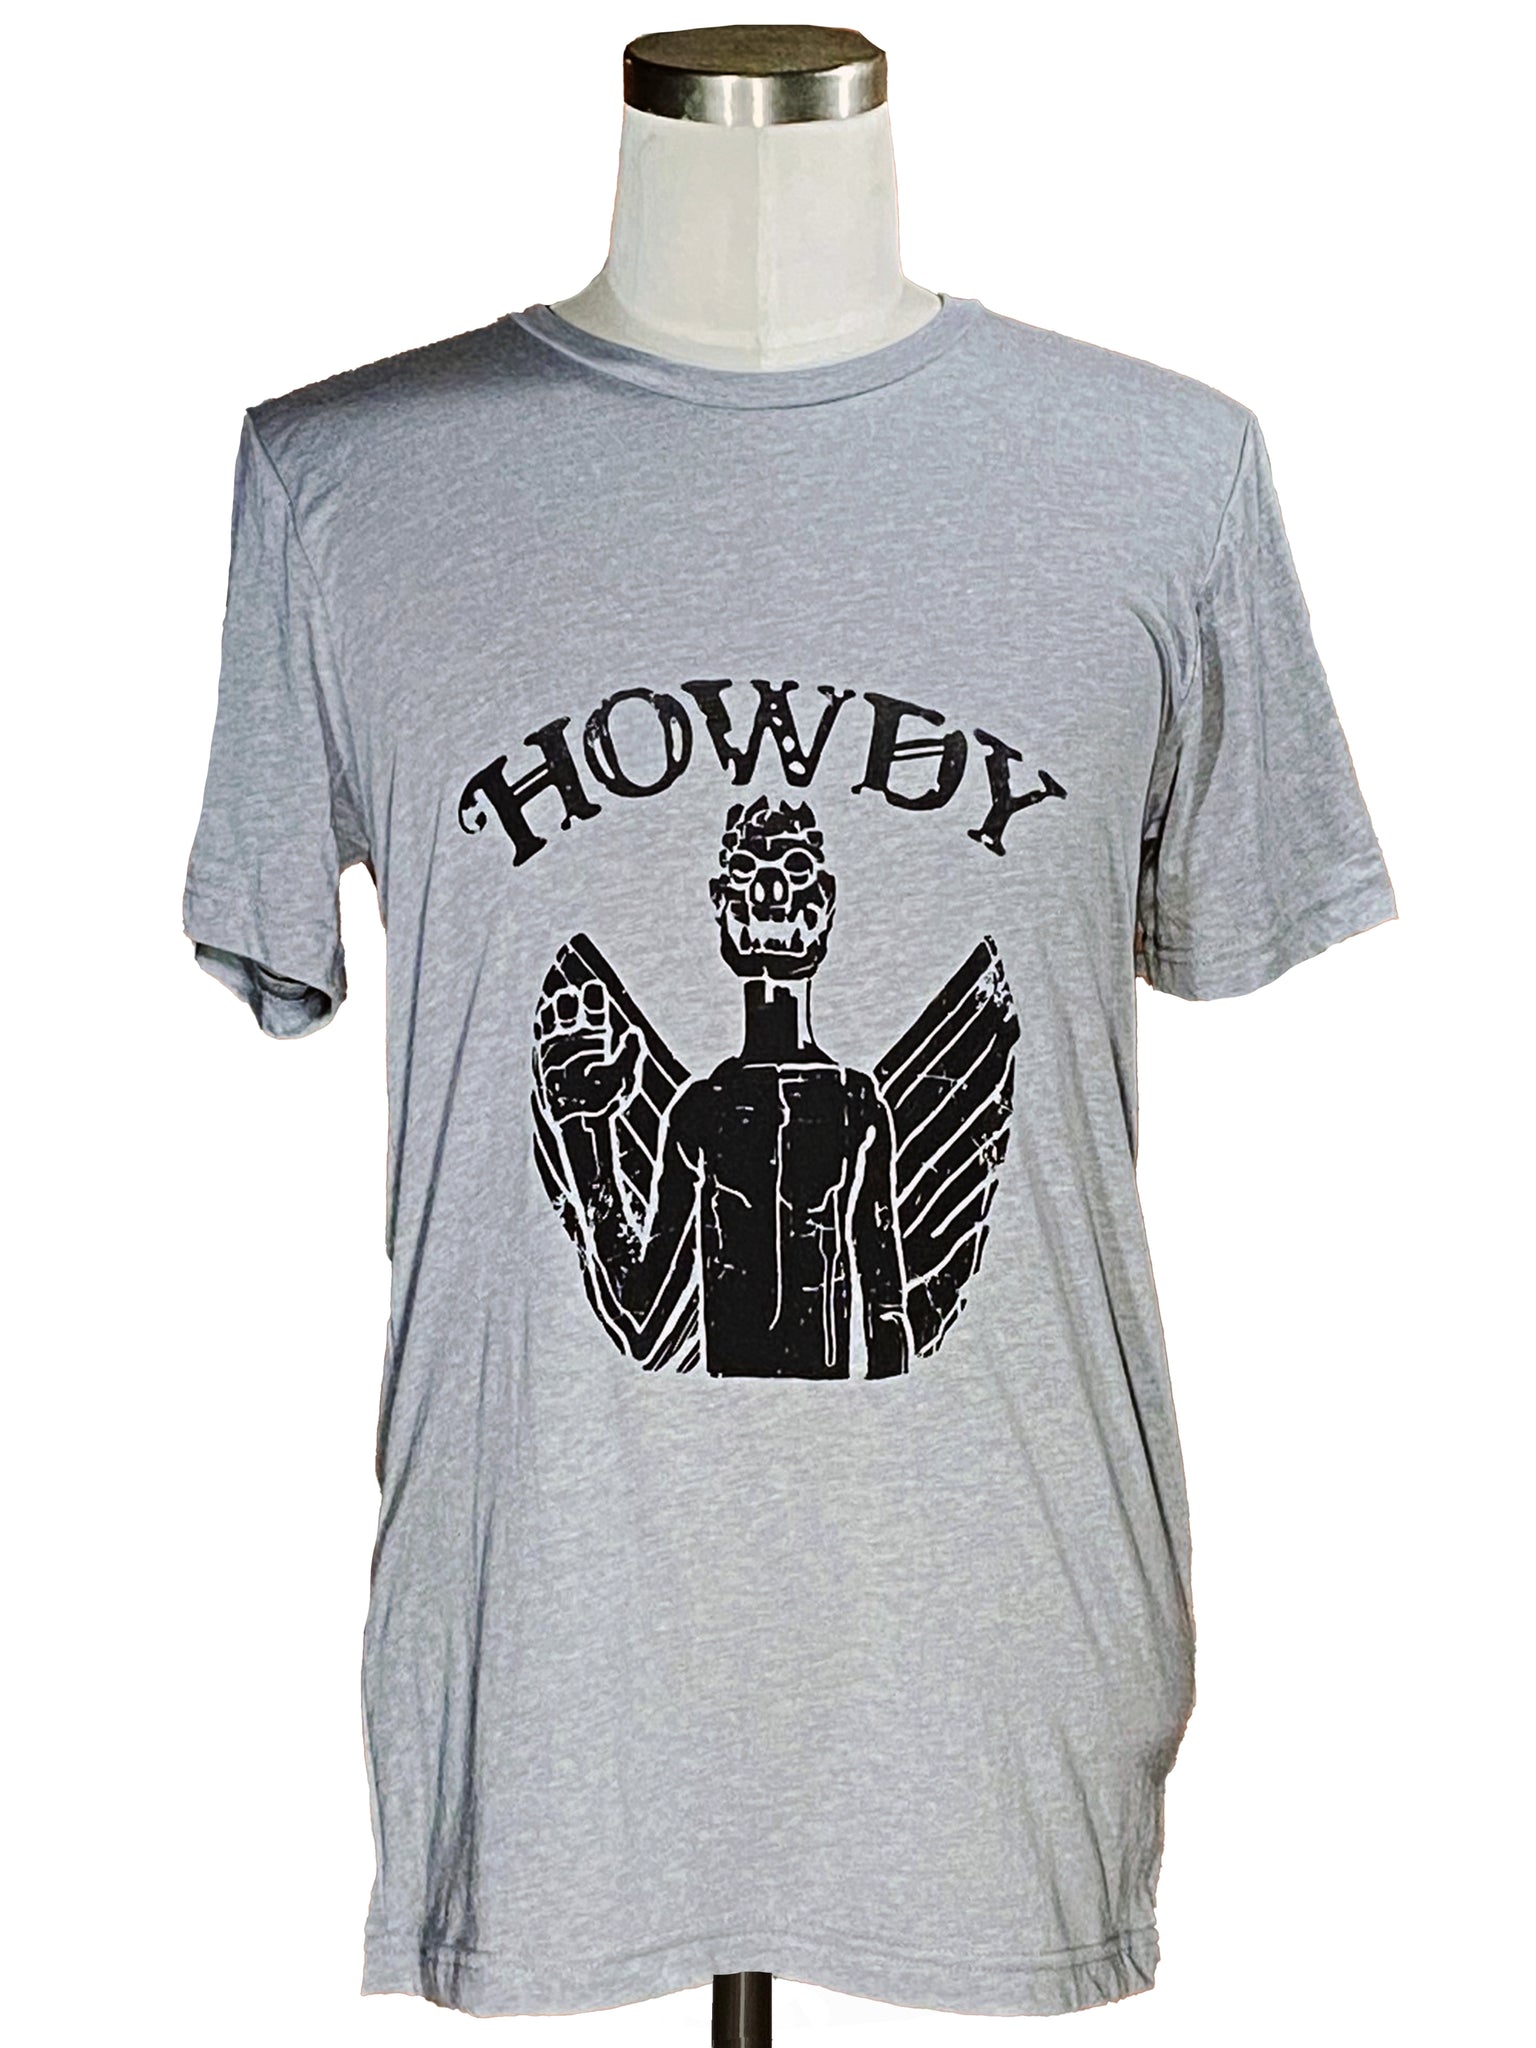 Captain Howdy Exorcist T-Shirt